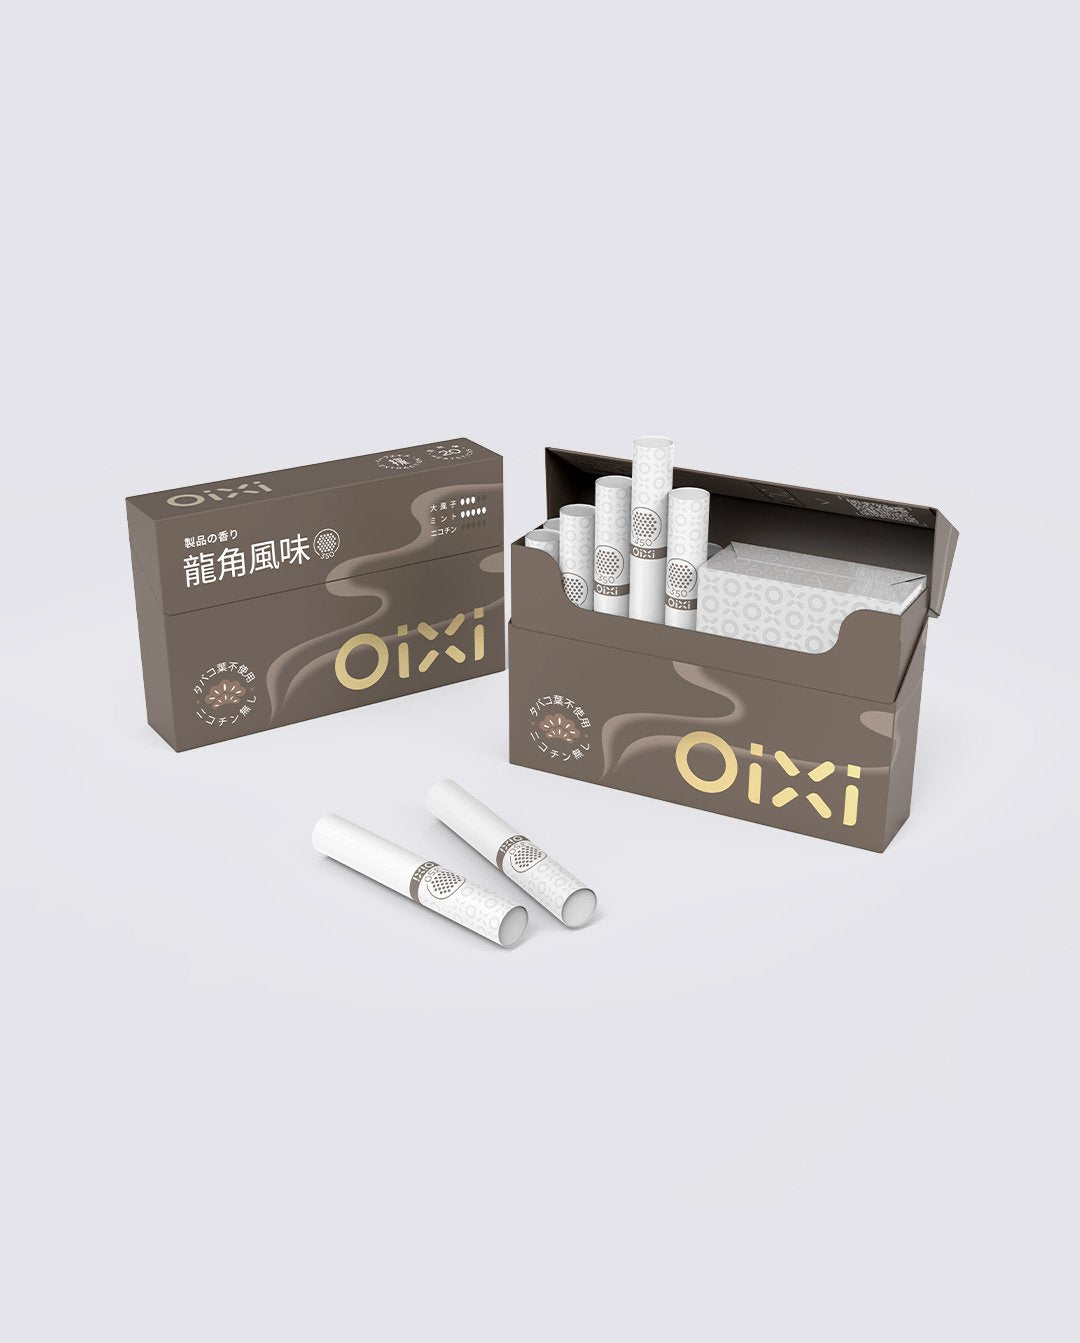 OiXi(コーヒー味) - タバコグッズ